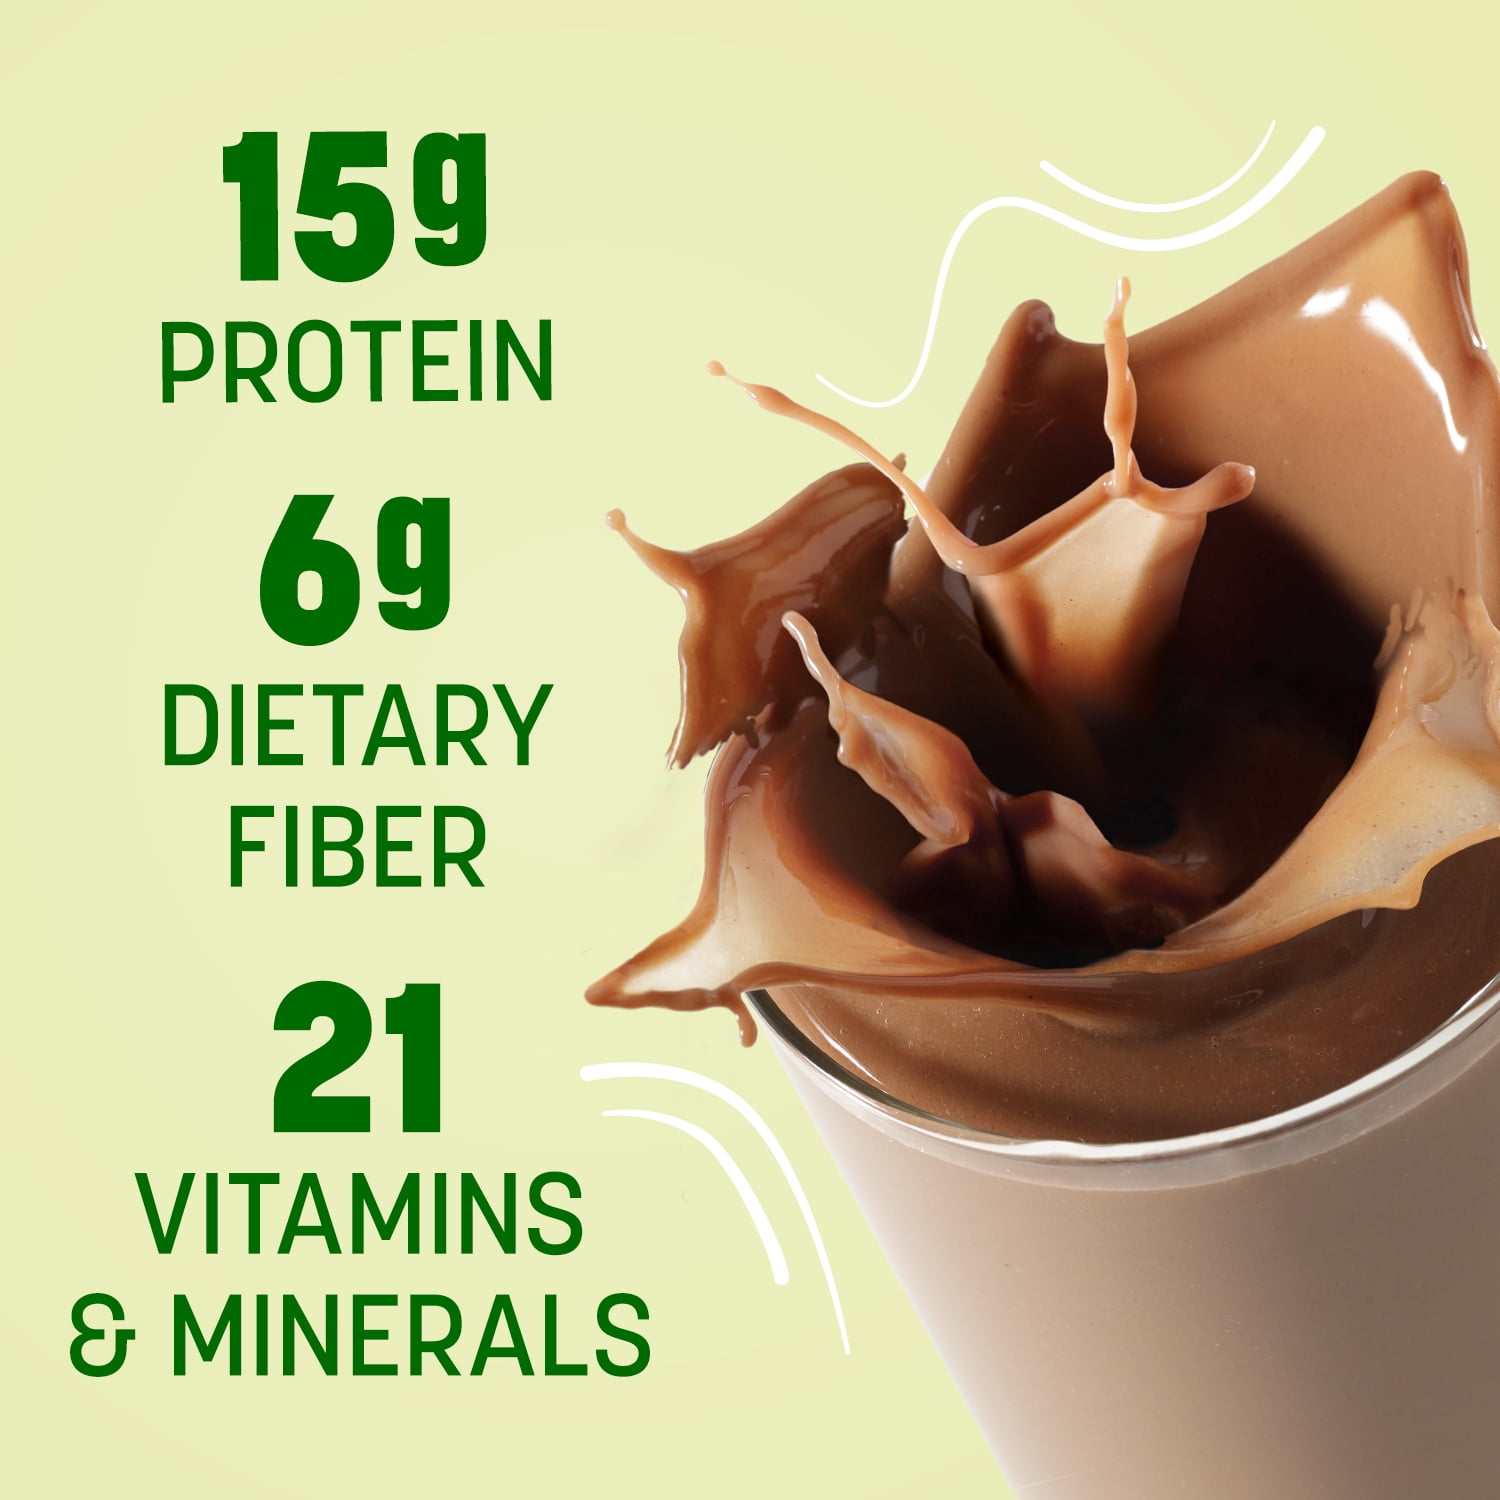 Nutrisystem® Body Select™ Chocolate Fudge Protein & Probiotic